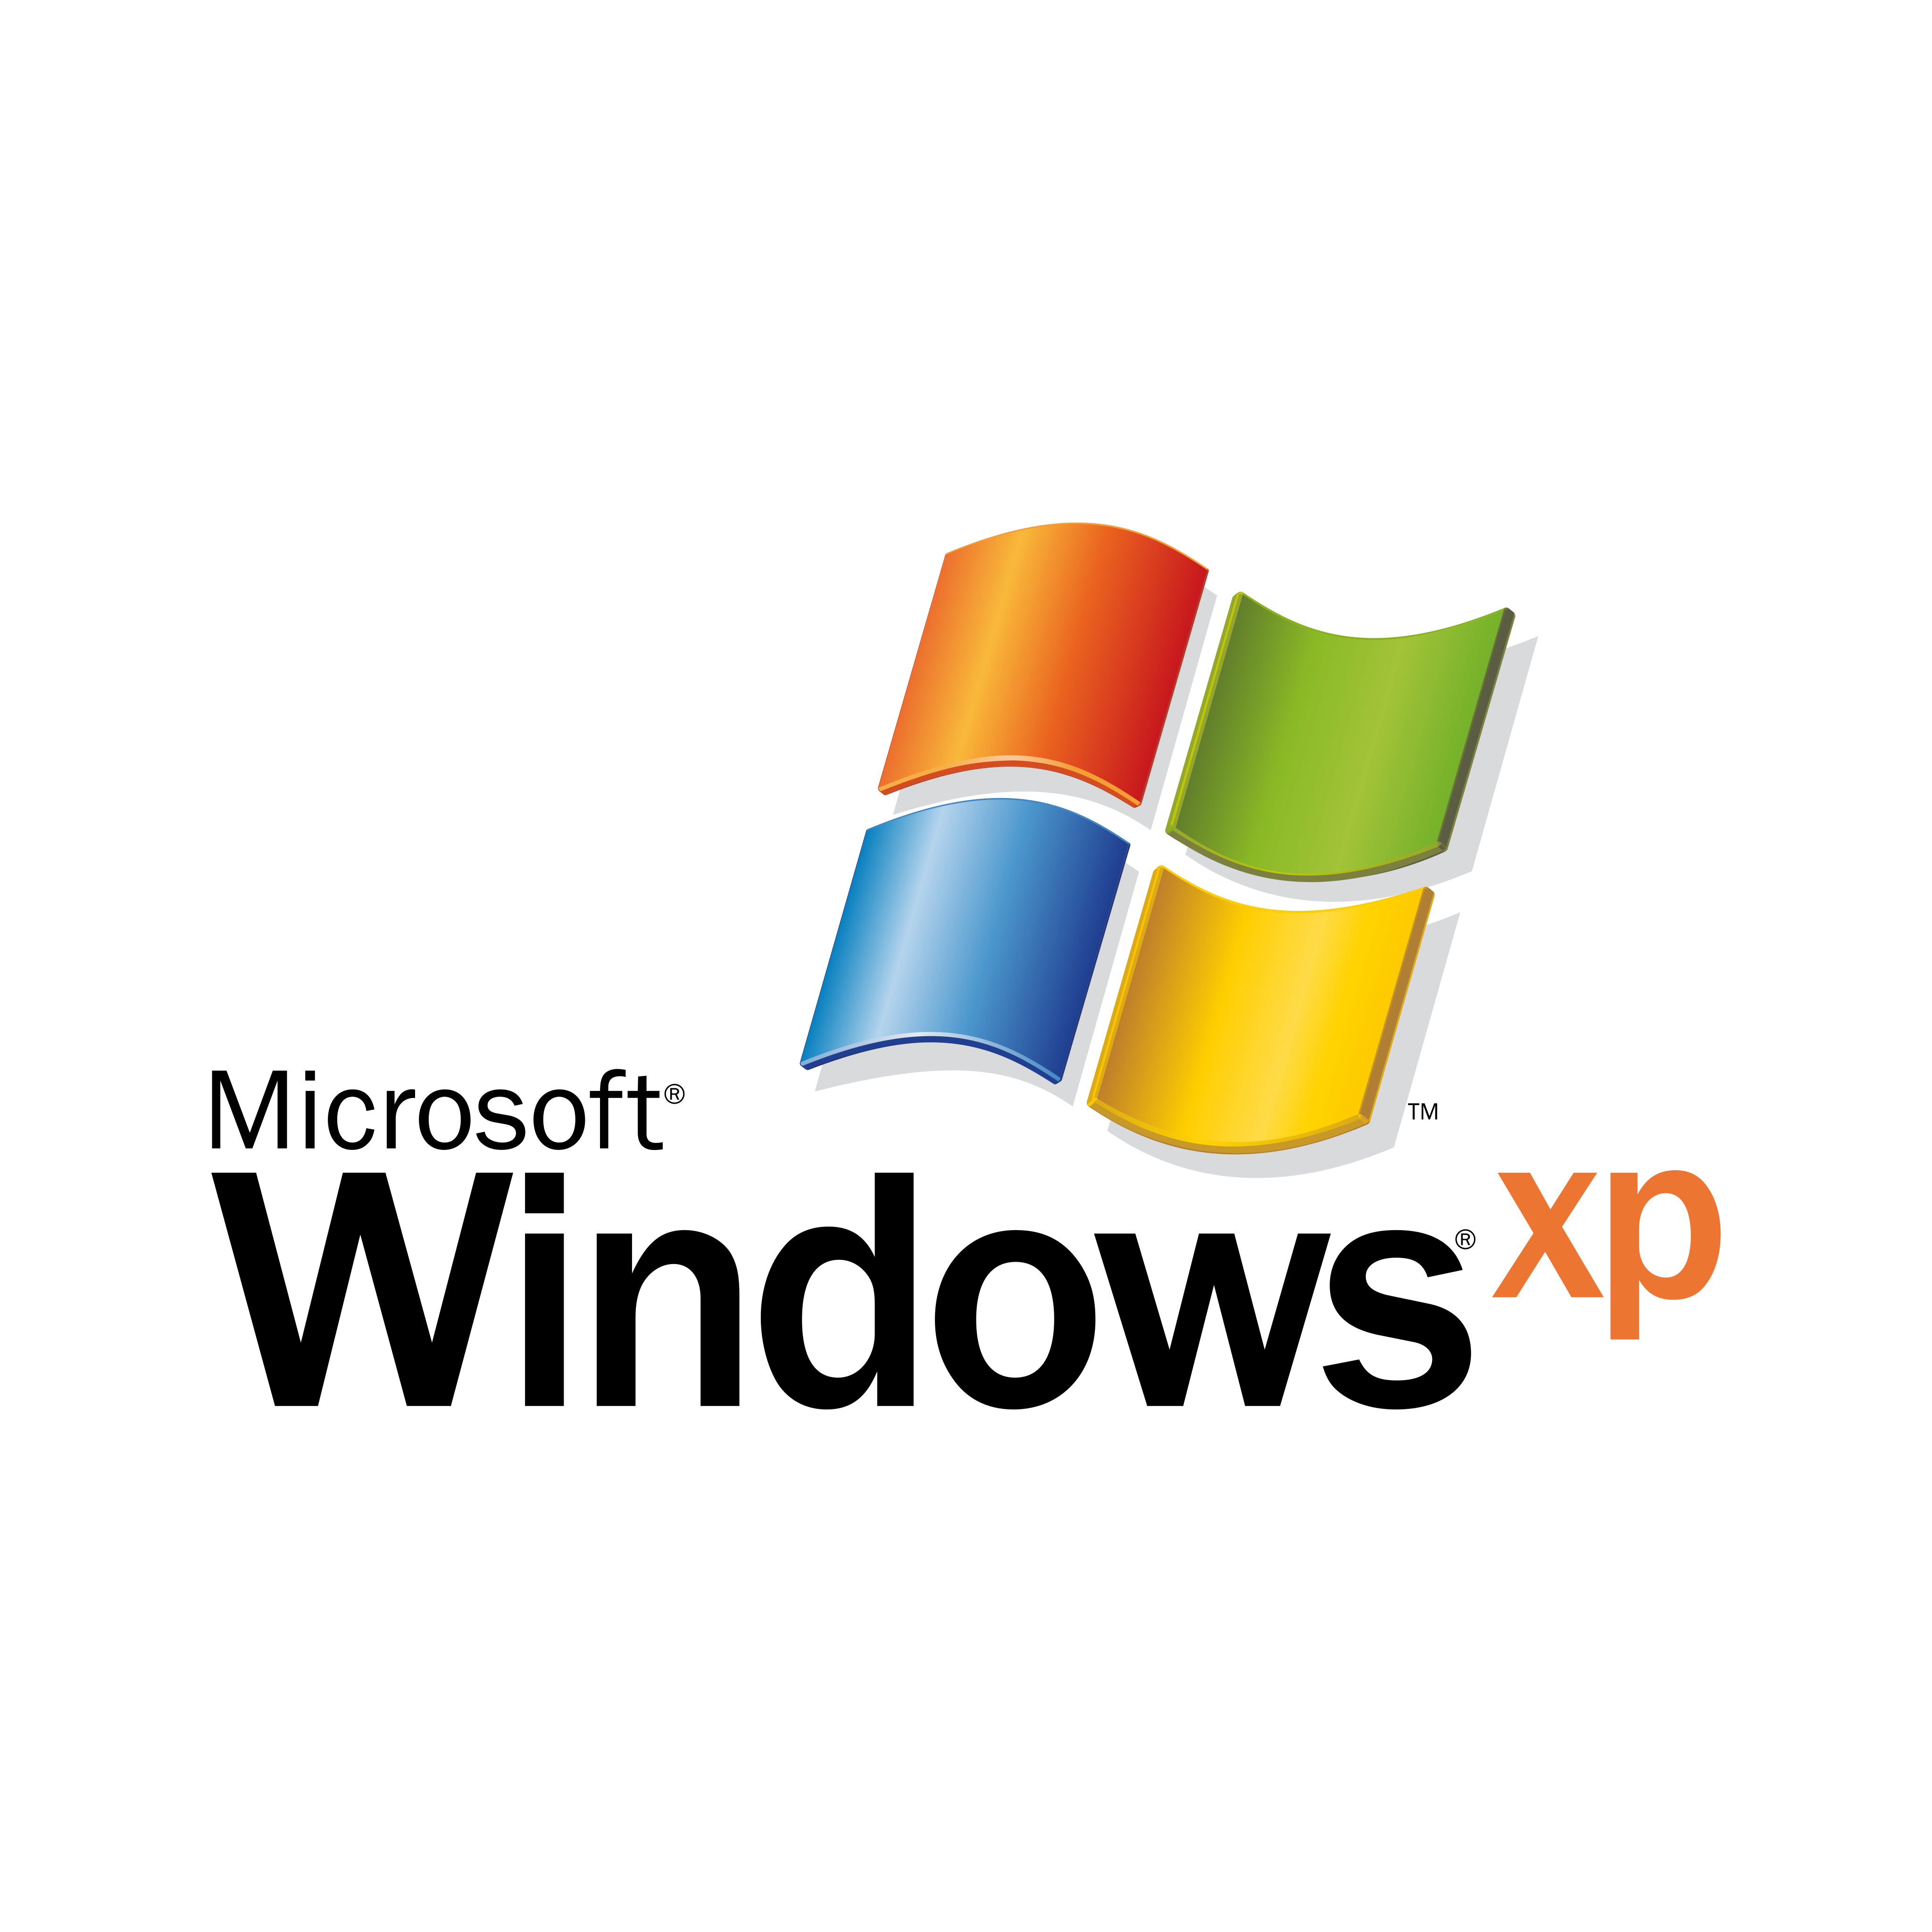 Windows XP Logo PNG.